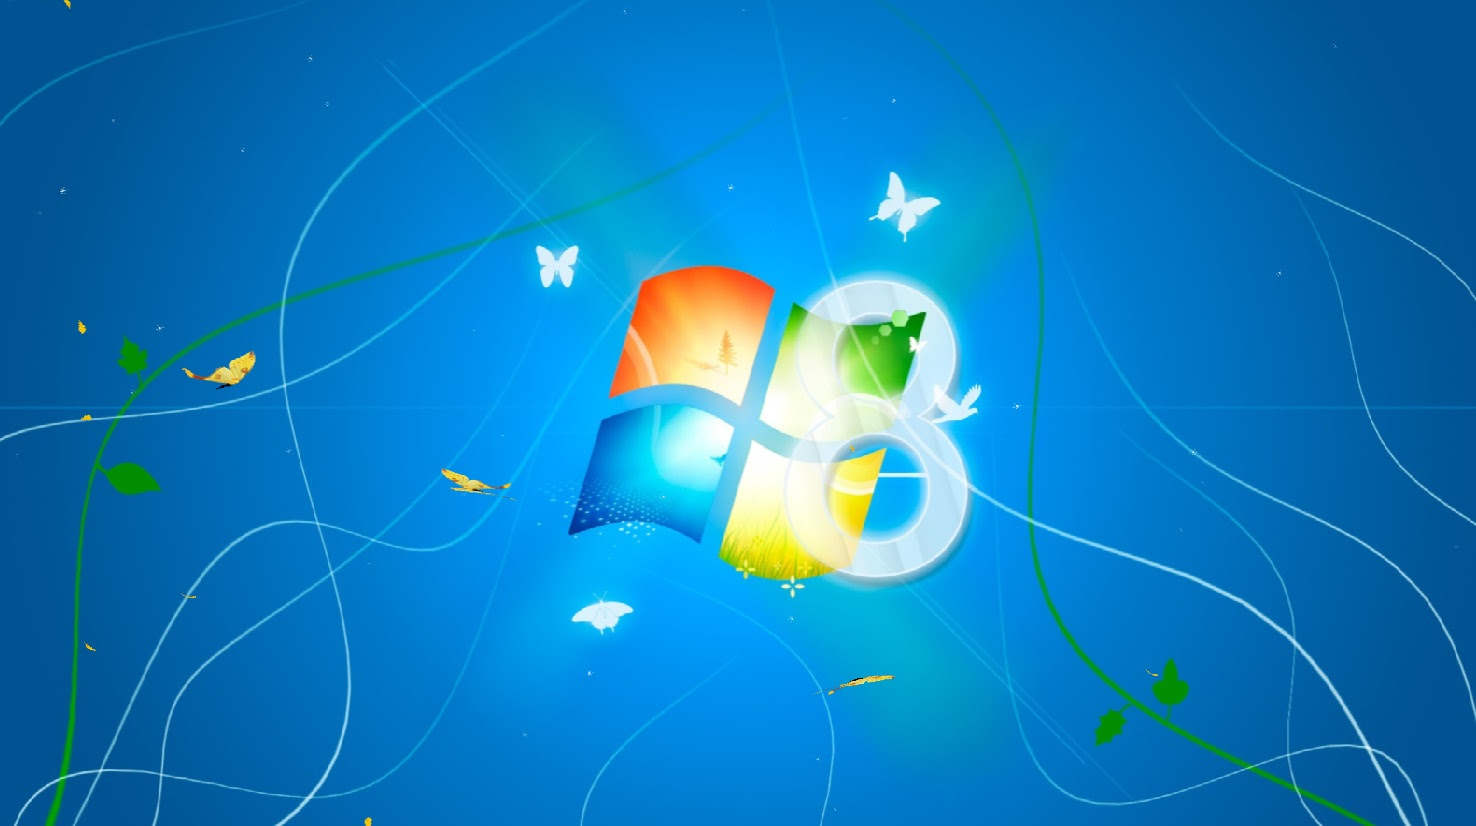  Wallpaper  Desktop Bergerak  Windows  10  Terlengkap A1 